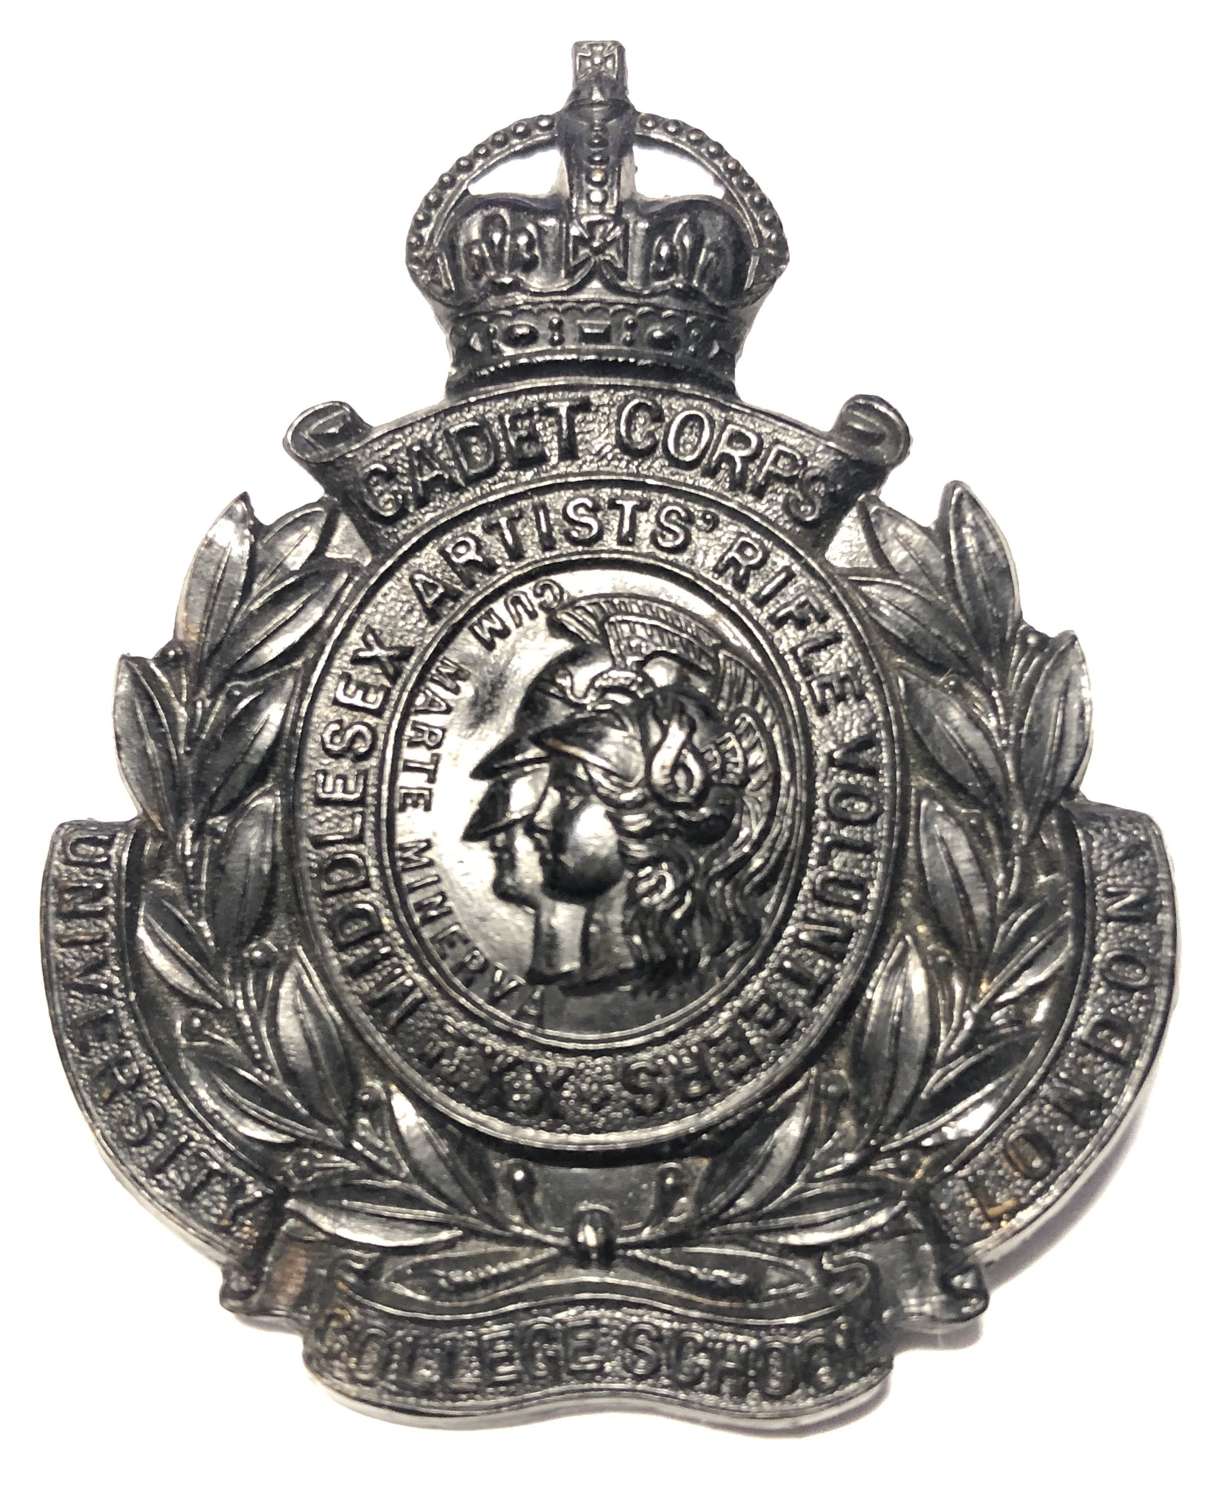 University College School, London Cadet Corps cap badge c1902-08